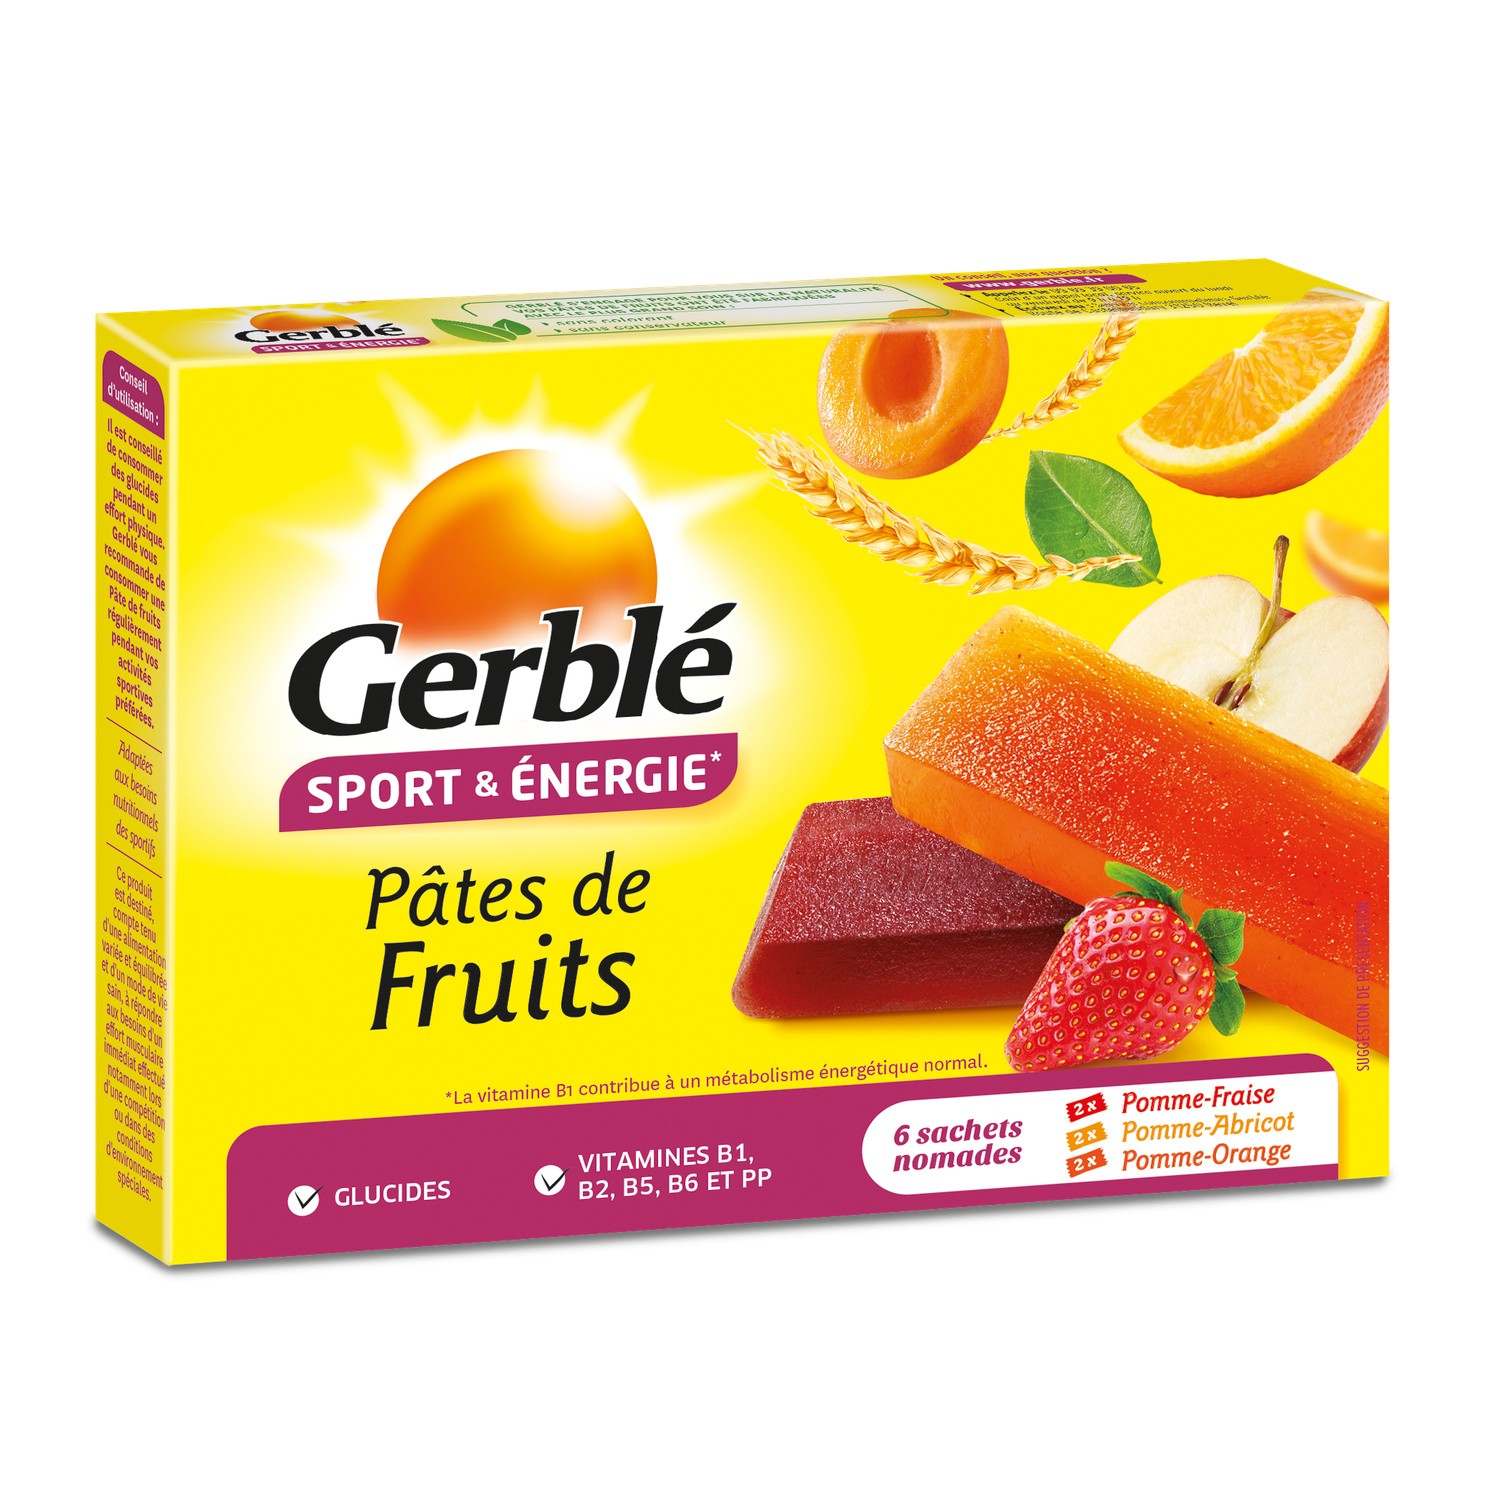 Fruit Bars Assortment Gerblé, Buy Online